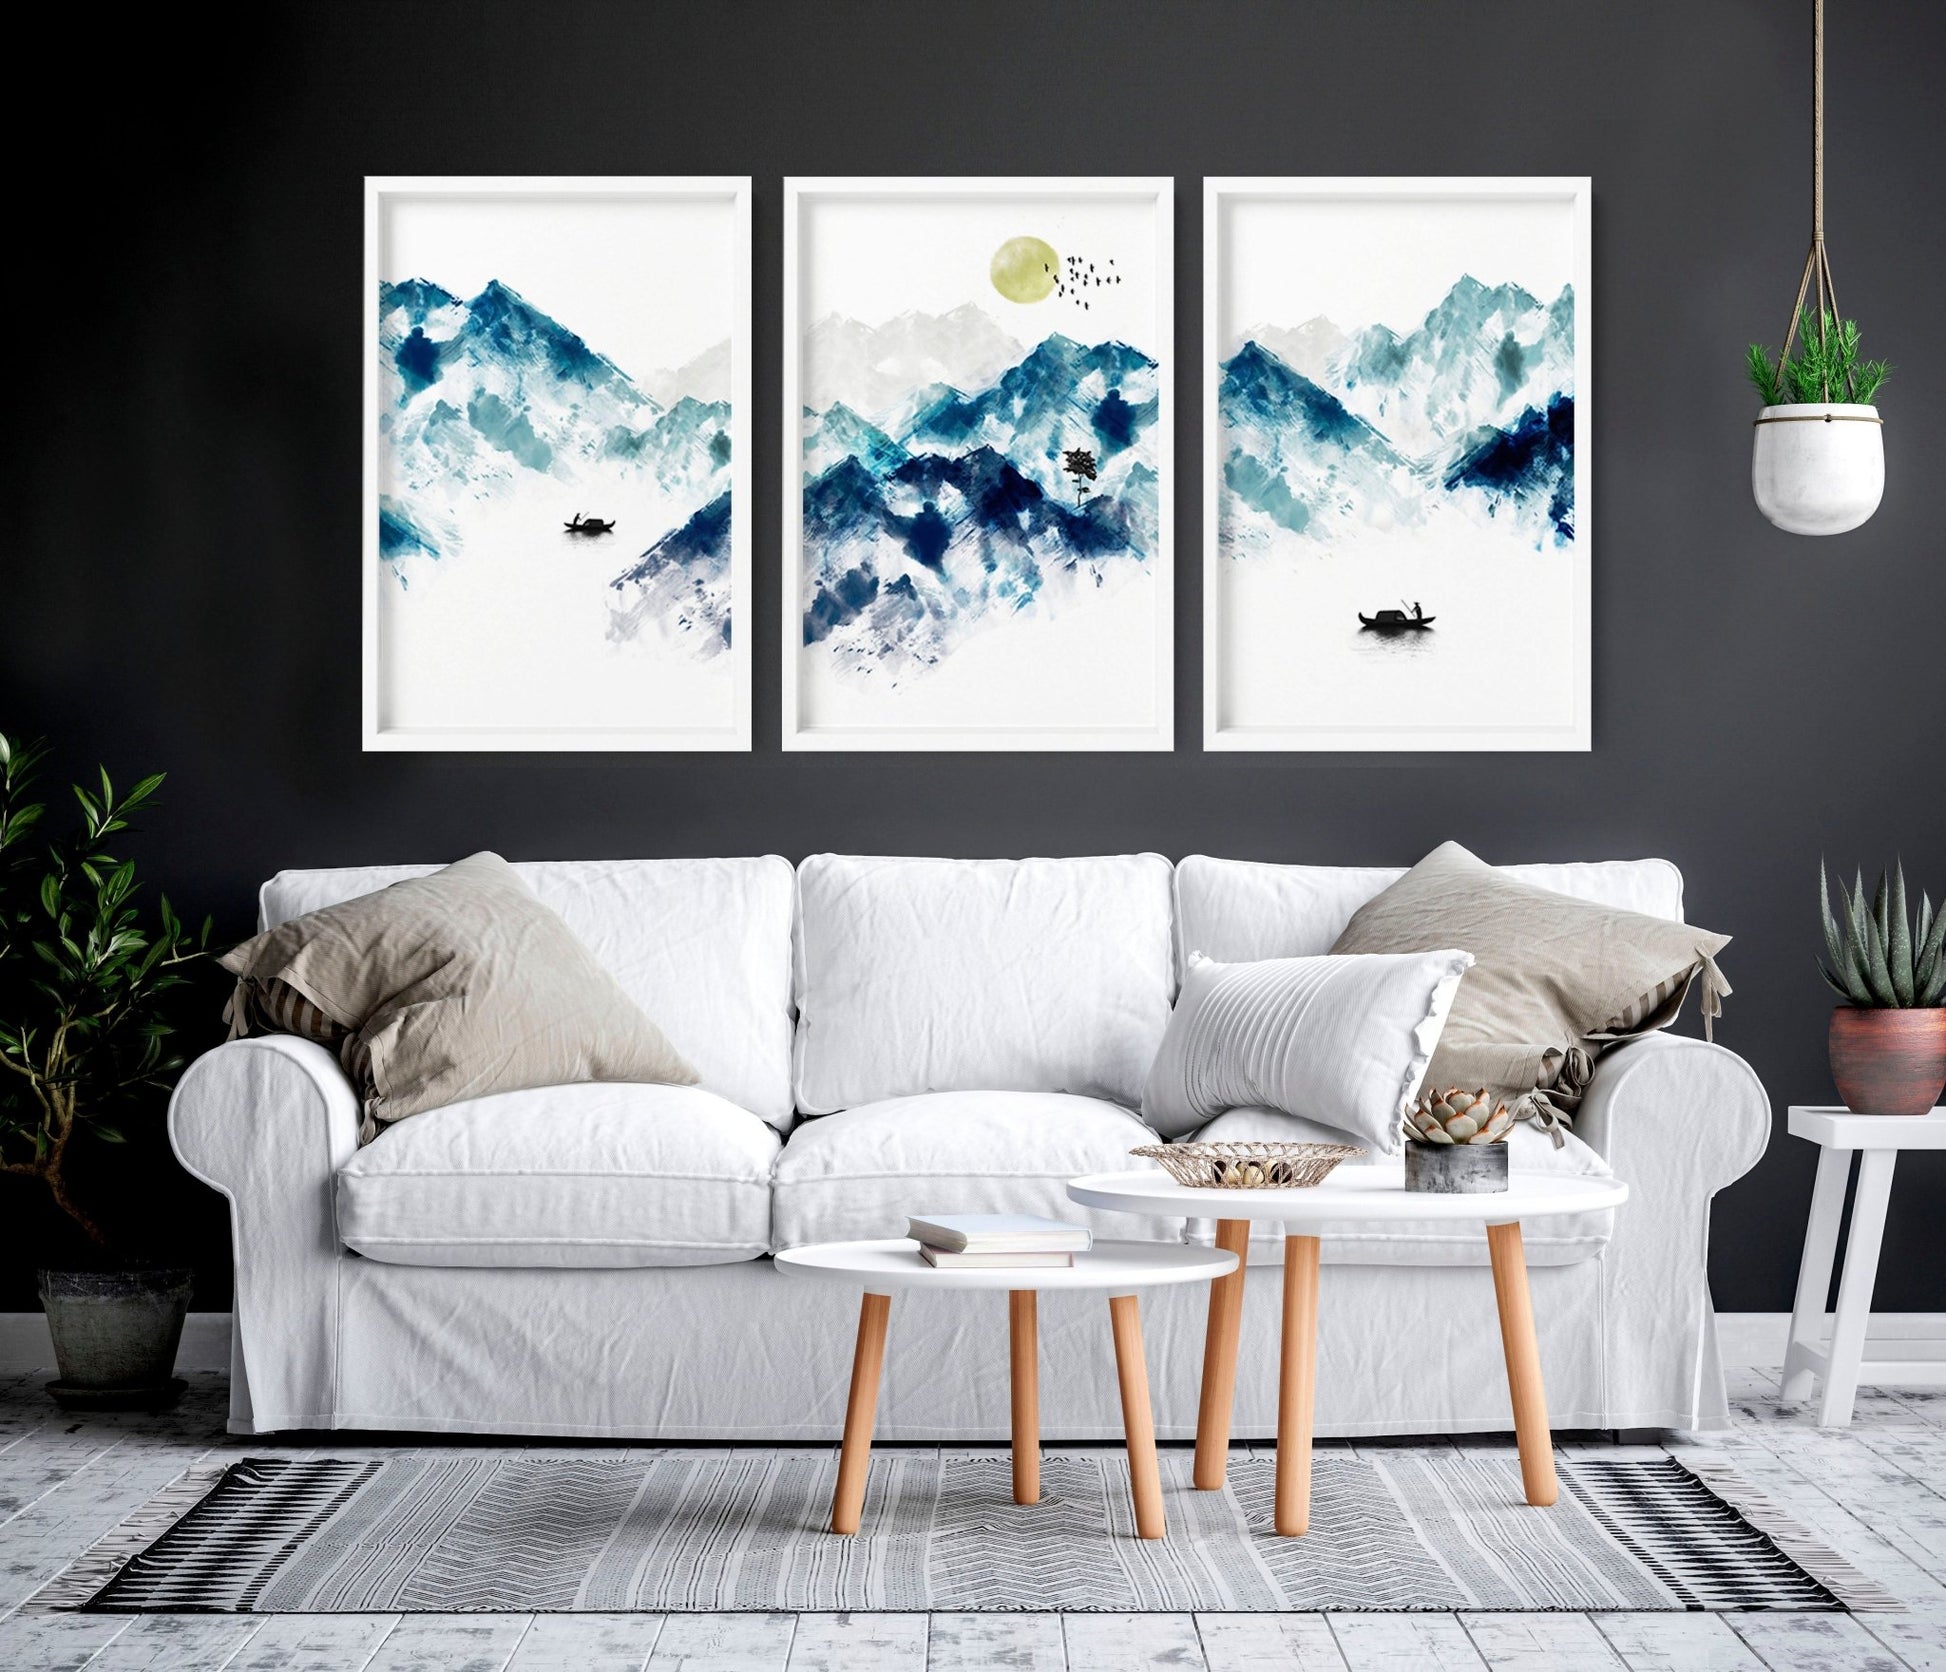 Asian Wall Art prints | set of 3 wall art prints - About Wall Art